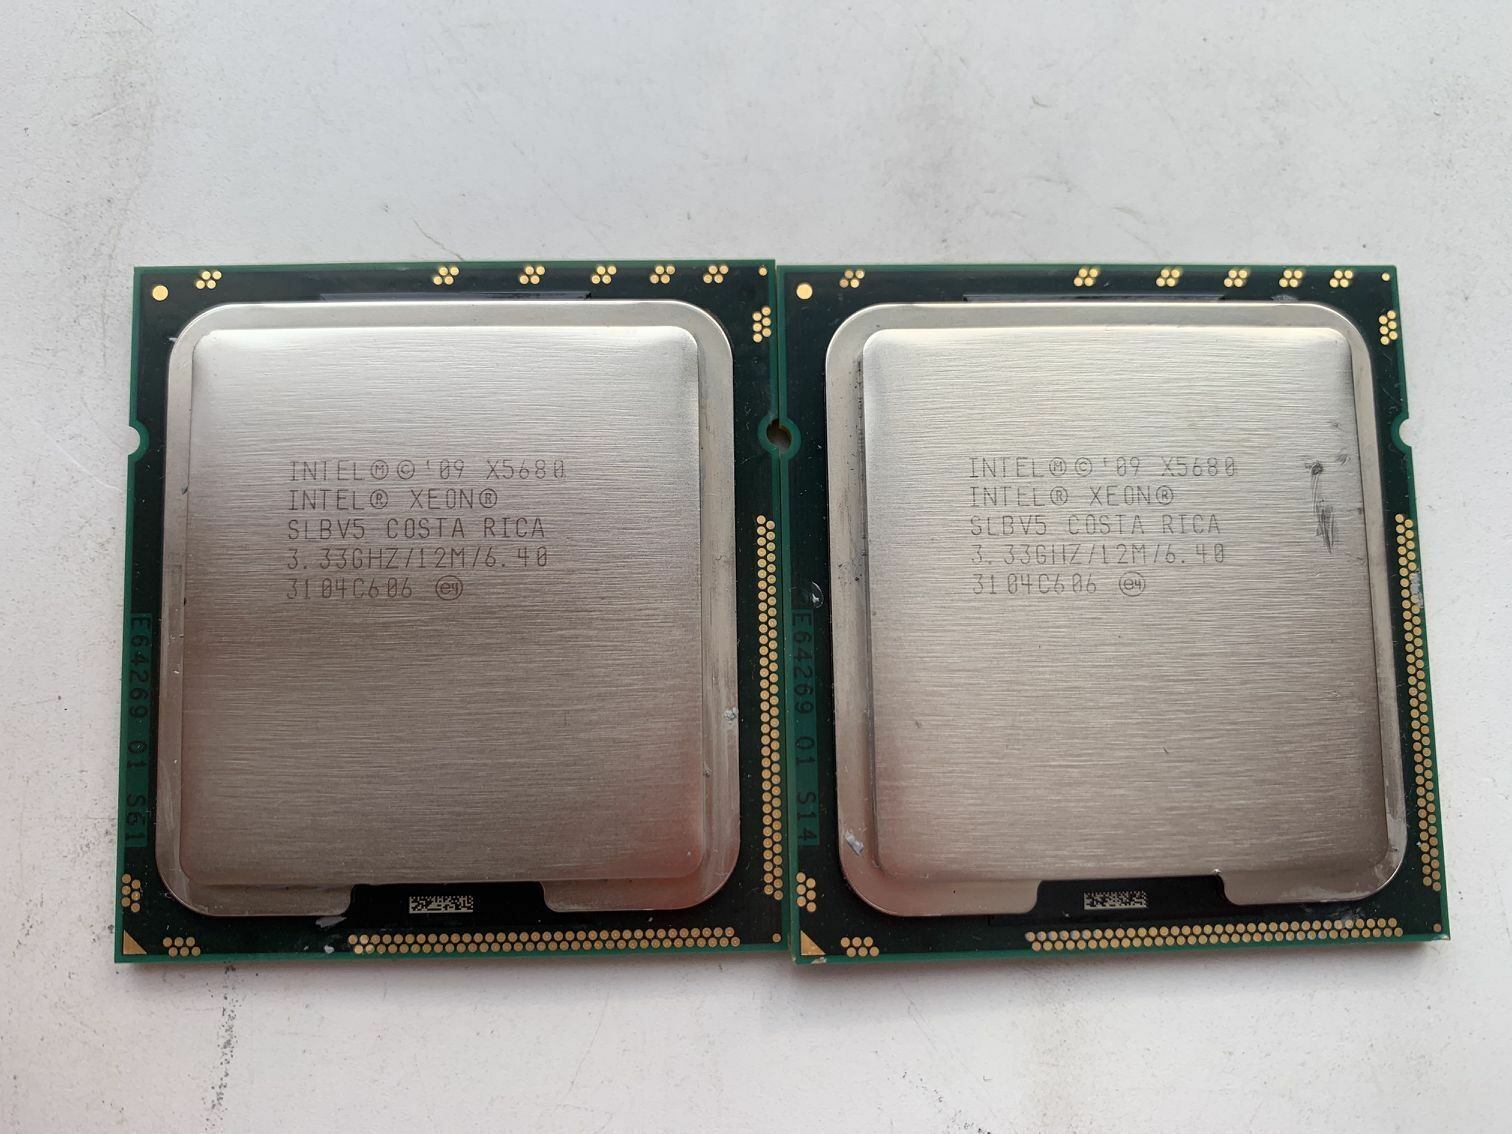  Processor Socket LGA1366 ServerCPU Matching pair Intel Xeon X5680 3.33GHz SLBV5